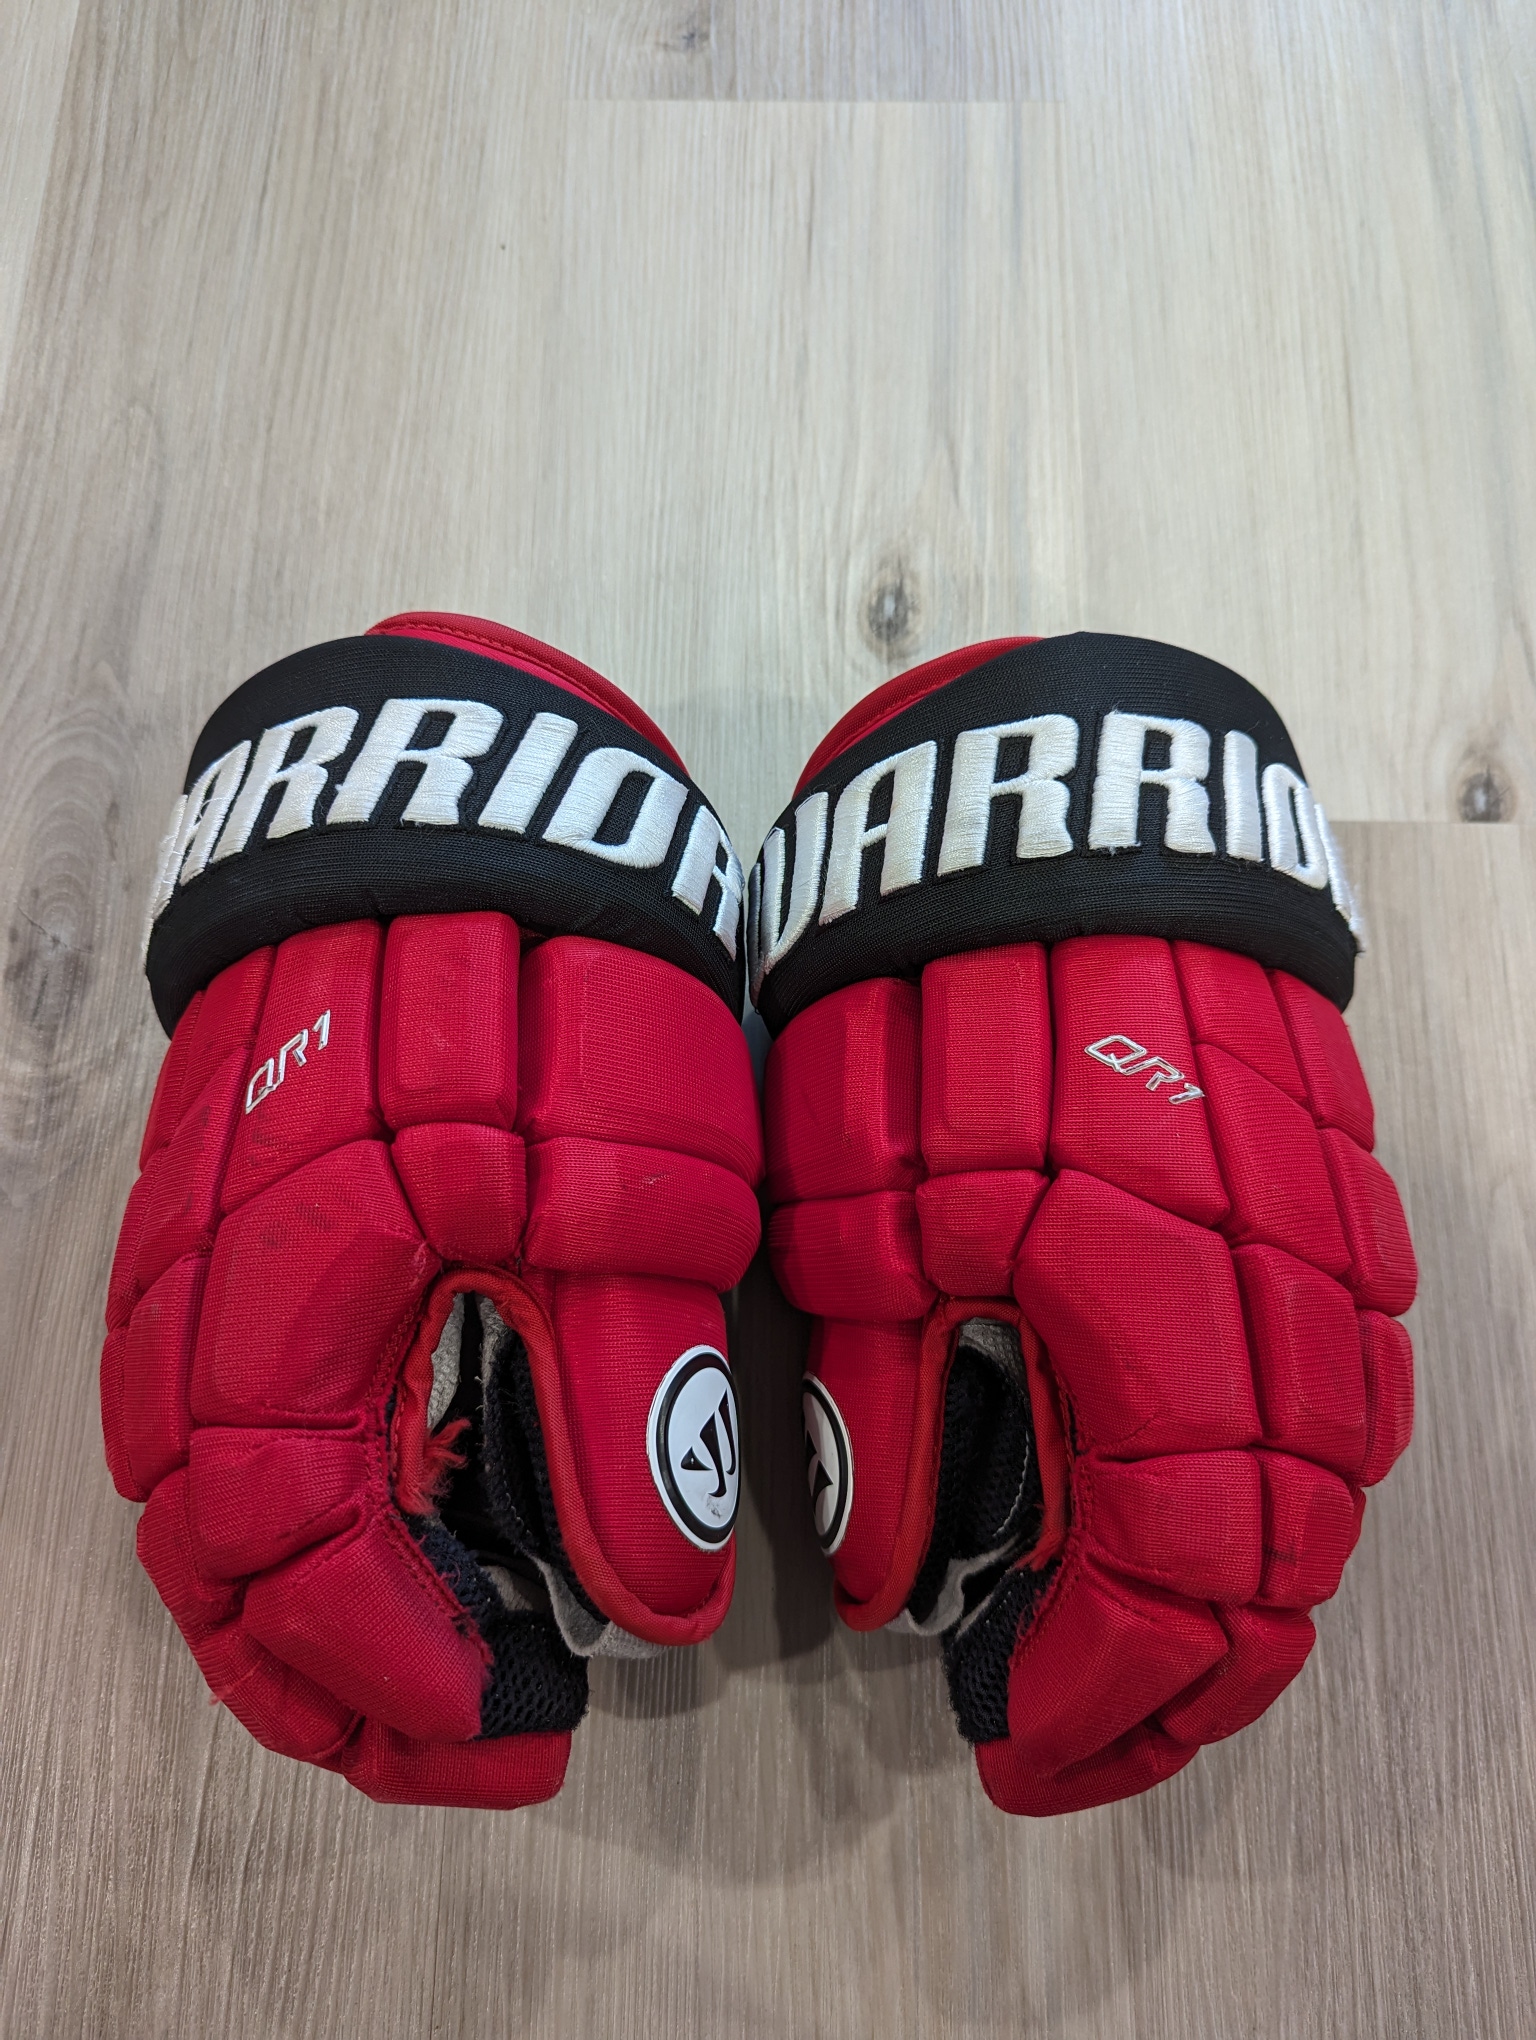 Warrior Covert QR1 Gloves 14" Pro Stock New Jersey Devils Egor Yakovlev